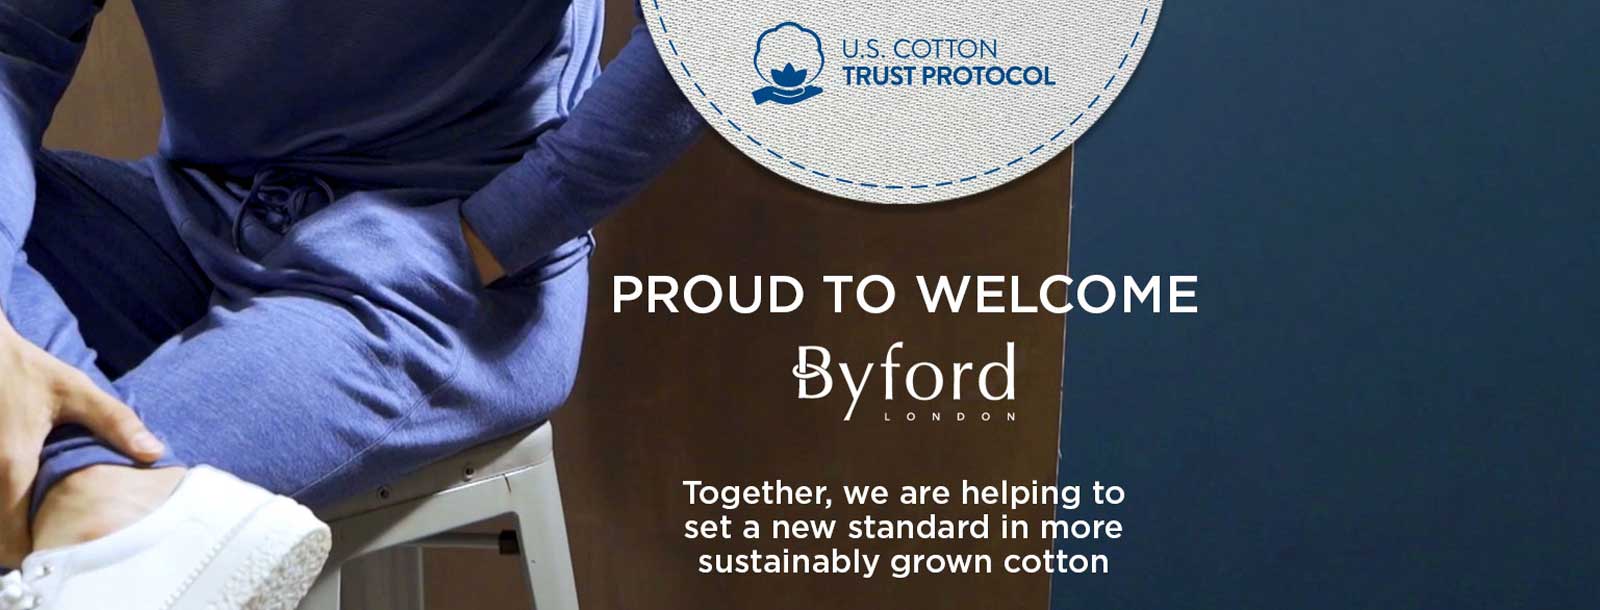 Byford joins U.S. Cotton Trust Protocol